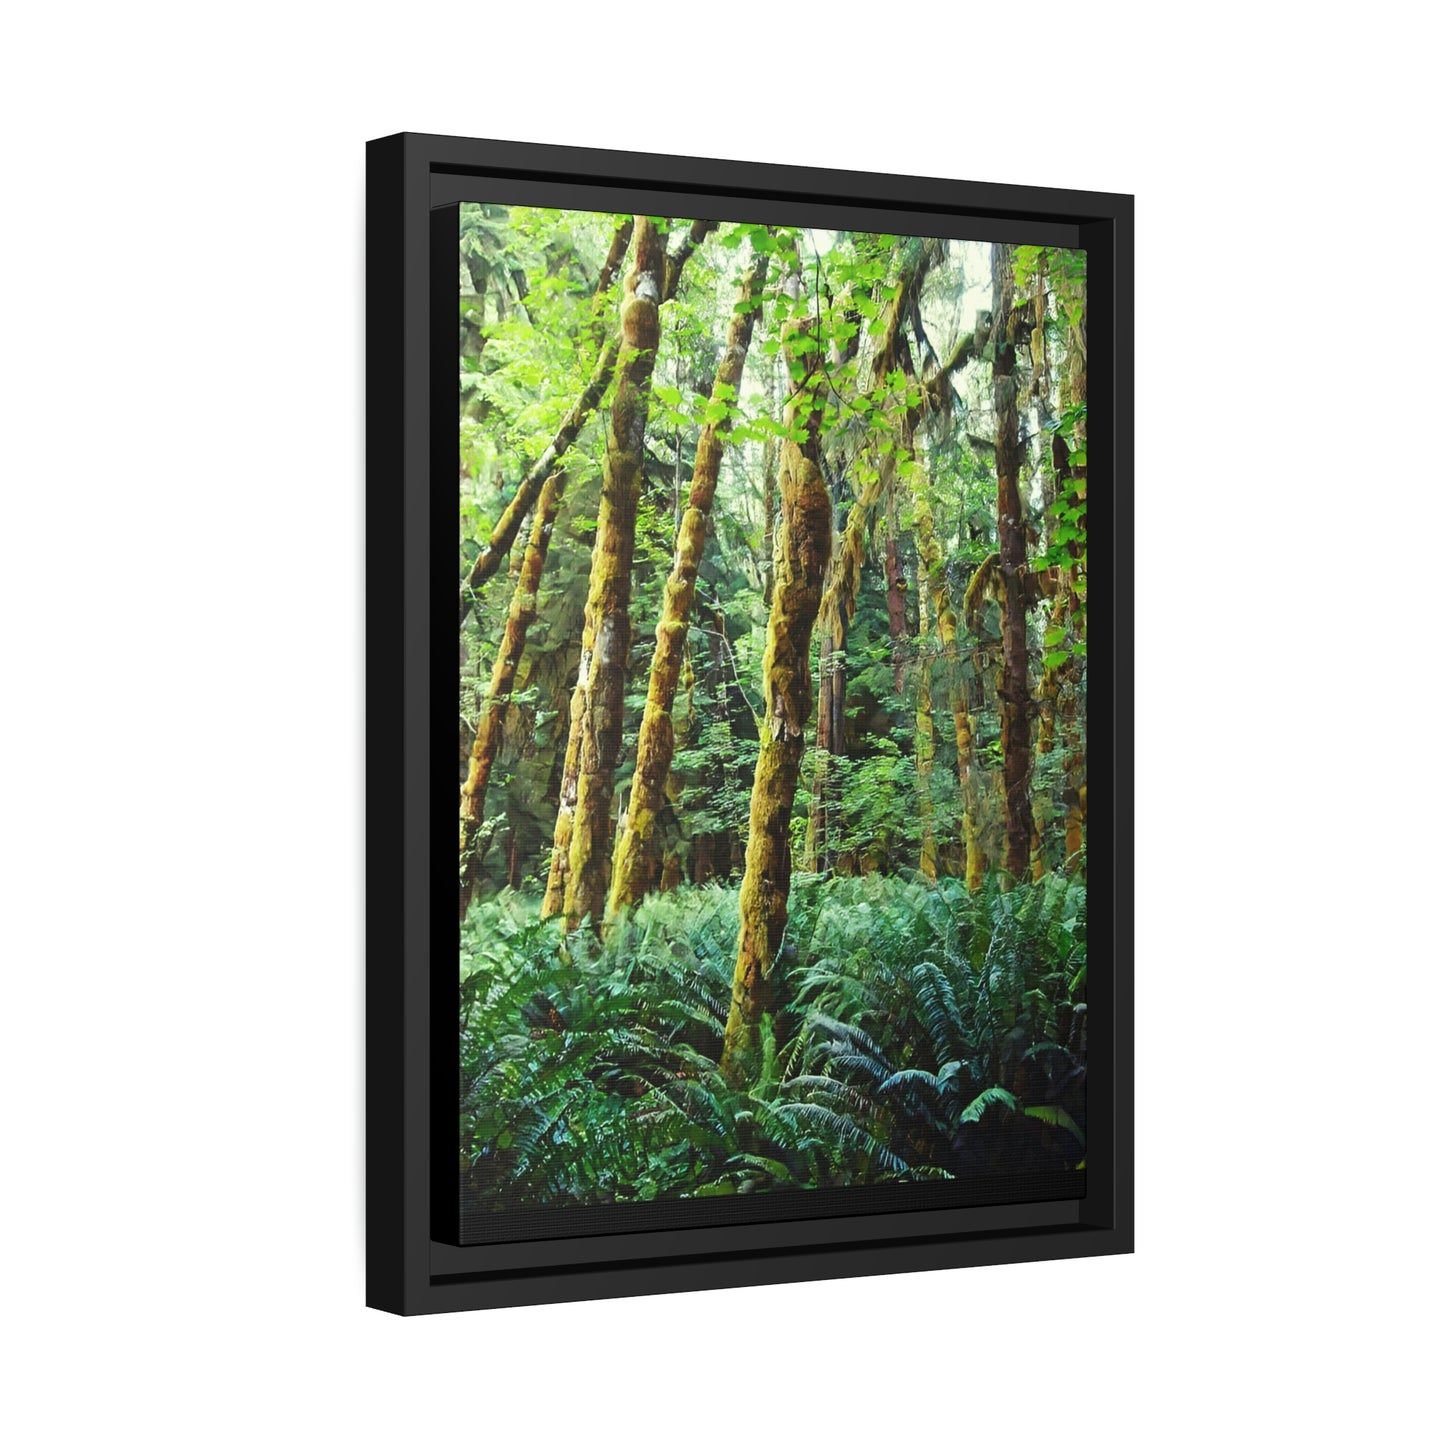 PNW Rainforest Wall Decor on a Black-Framed Canvas